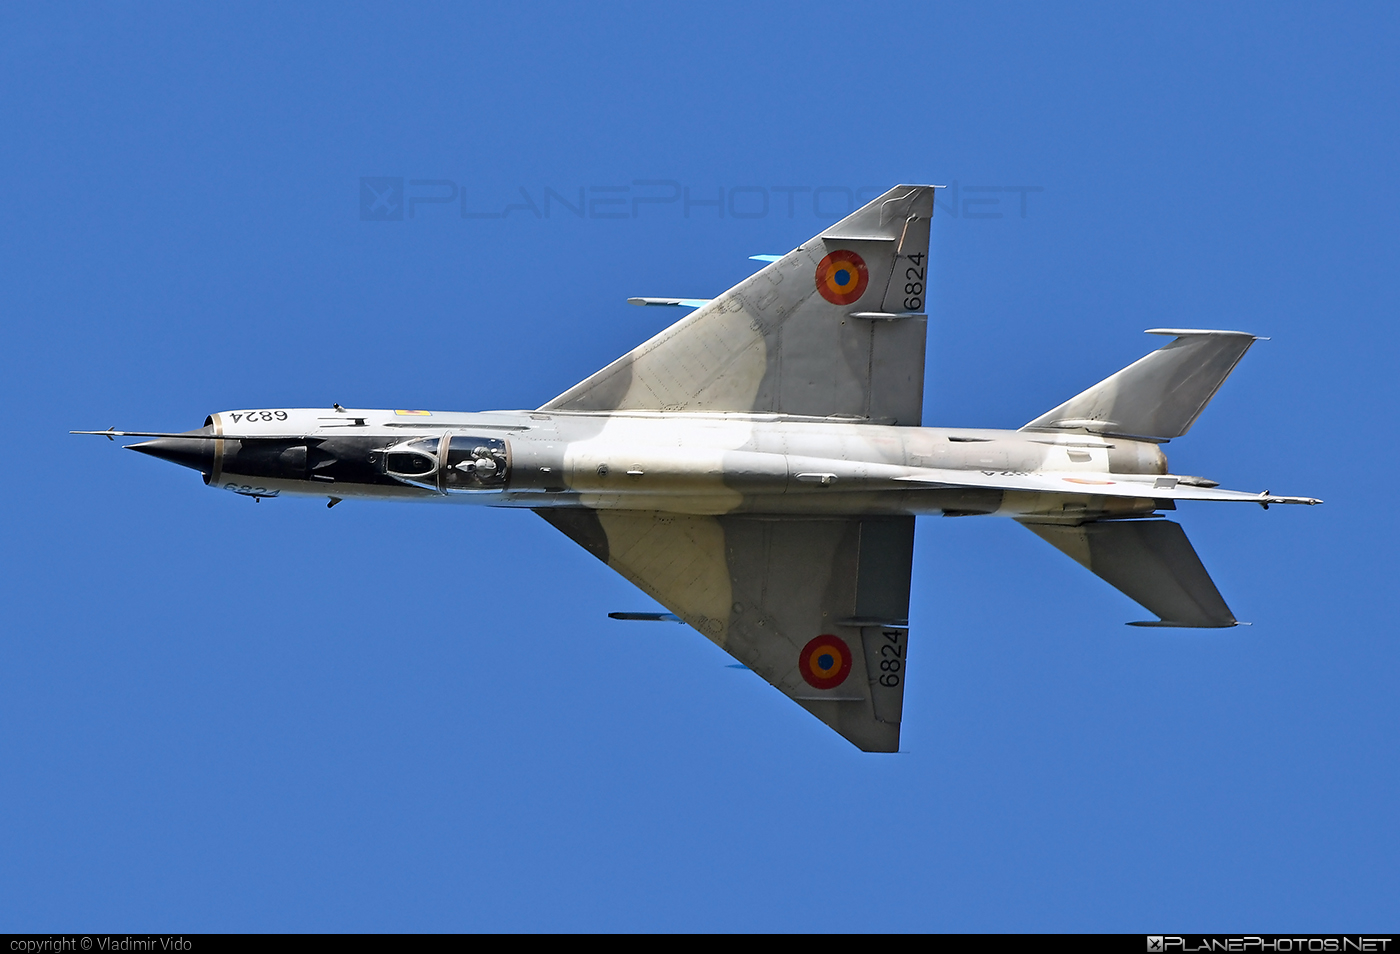 Mikoyan-Gurevich MiG-21MF - 6824 operated by Forţele Aeriene Române (Romanian Air Force) #forteleaerieneromane #mig #mig21 #mig21mf #mikoyangurevich #natodays #natodays2019 #romanianairforce